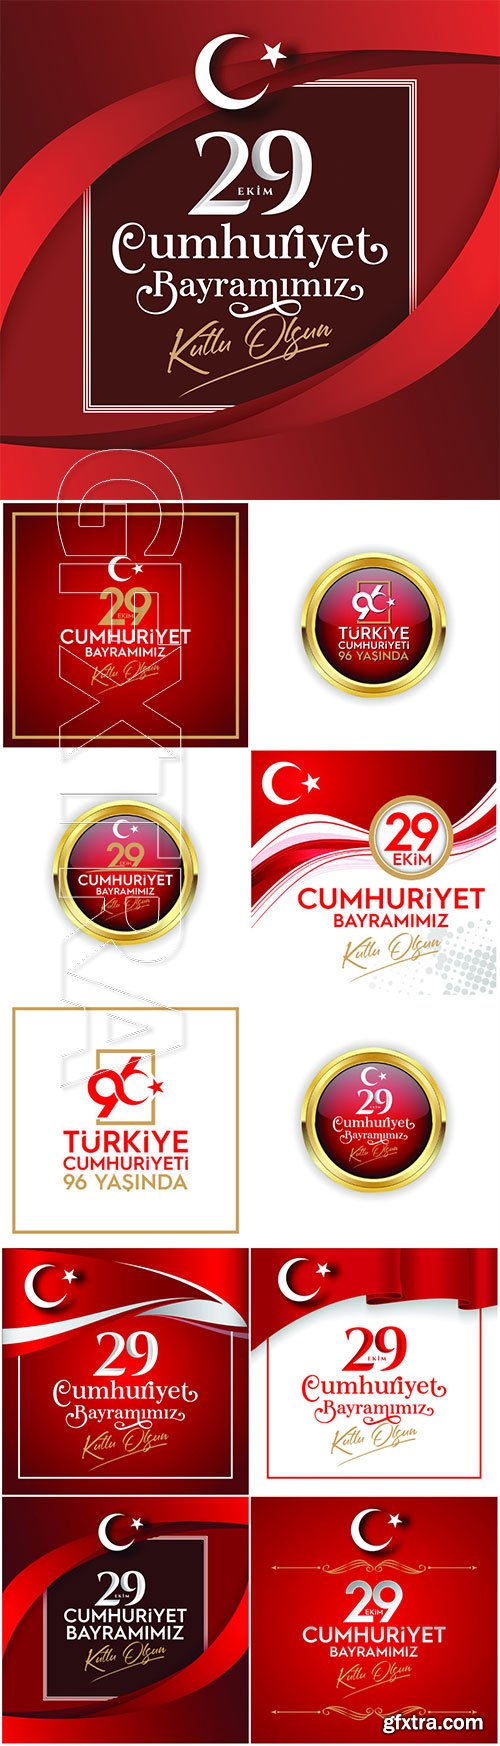 Republic Day of Turkey National Celebration Card, October 29